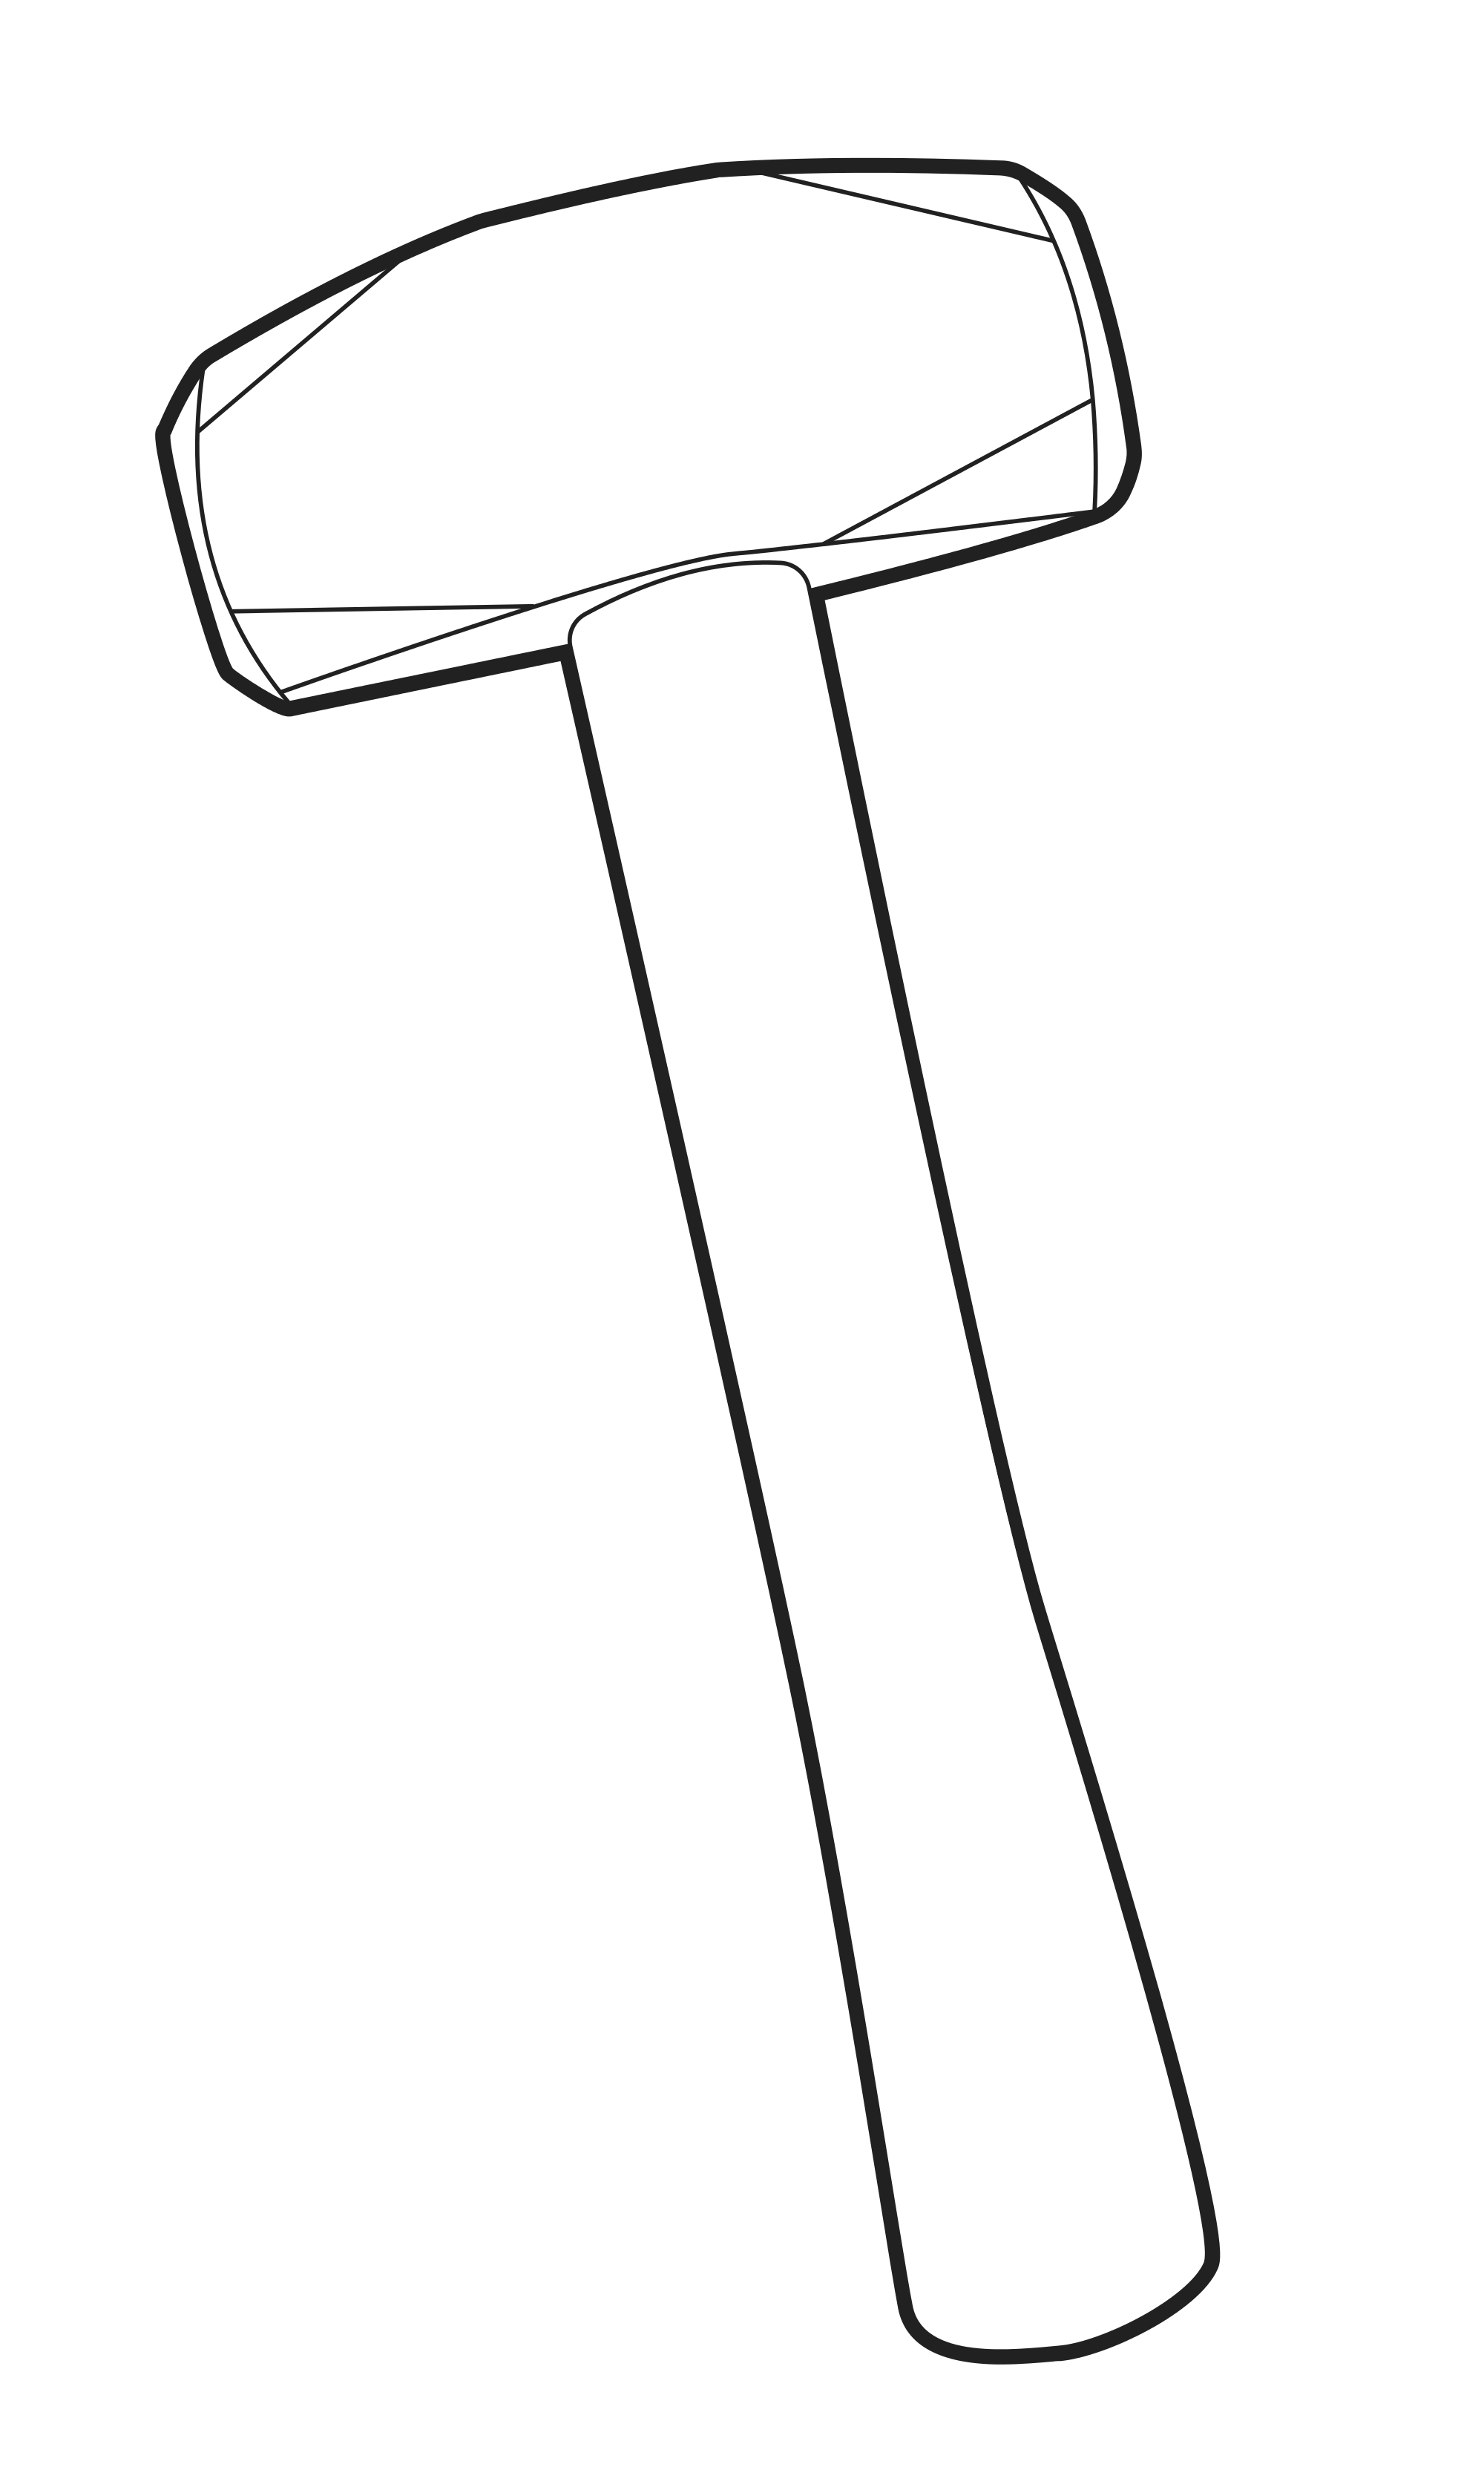 Hammer Drawing at GetDrawings | Free download